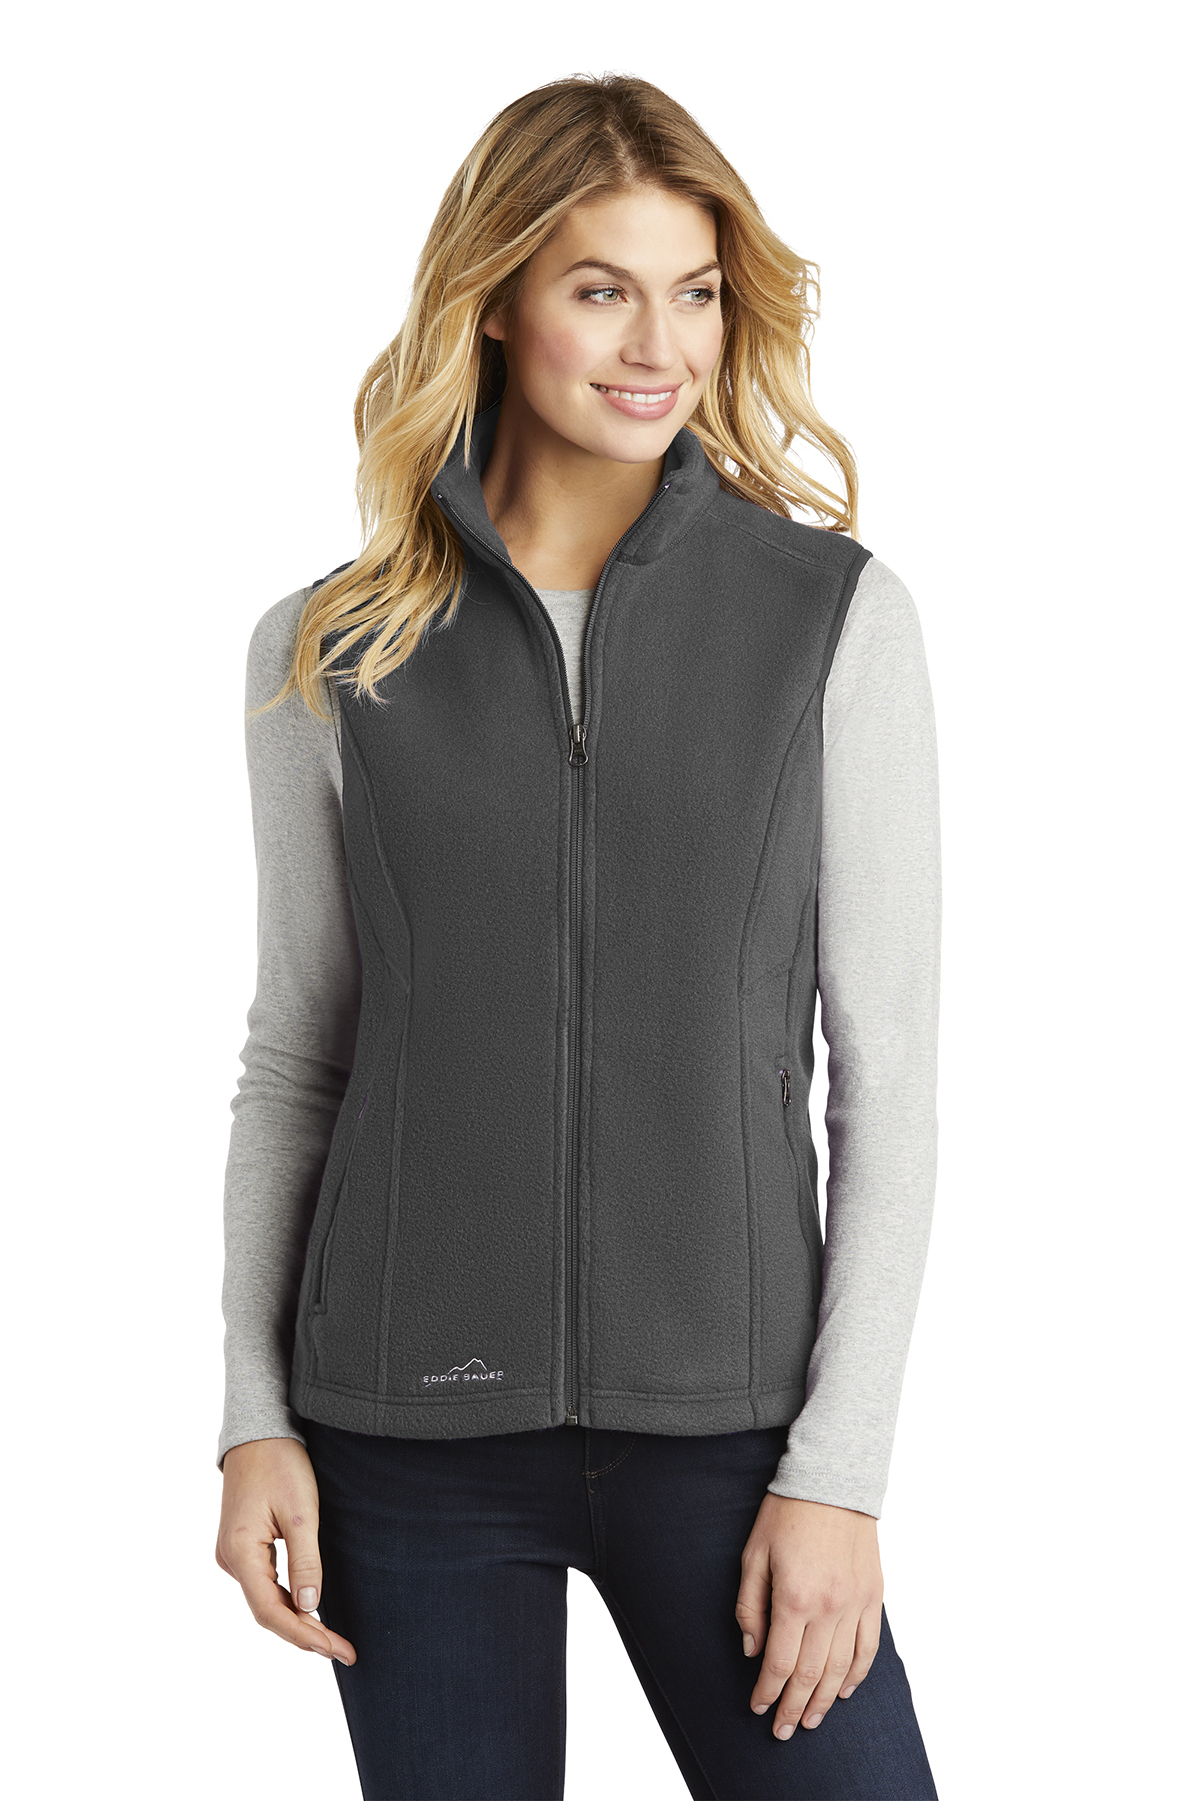 Eddie Bauer - Ladies Fleece Vest | Product | SanMar